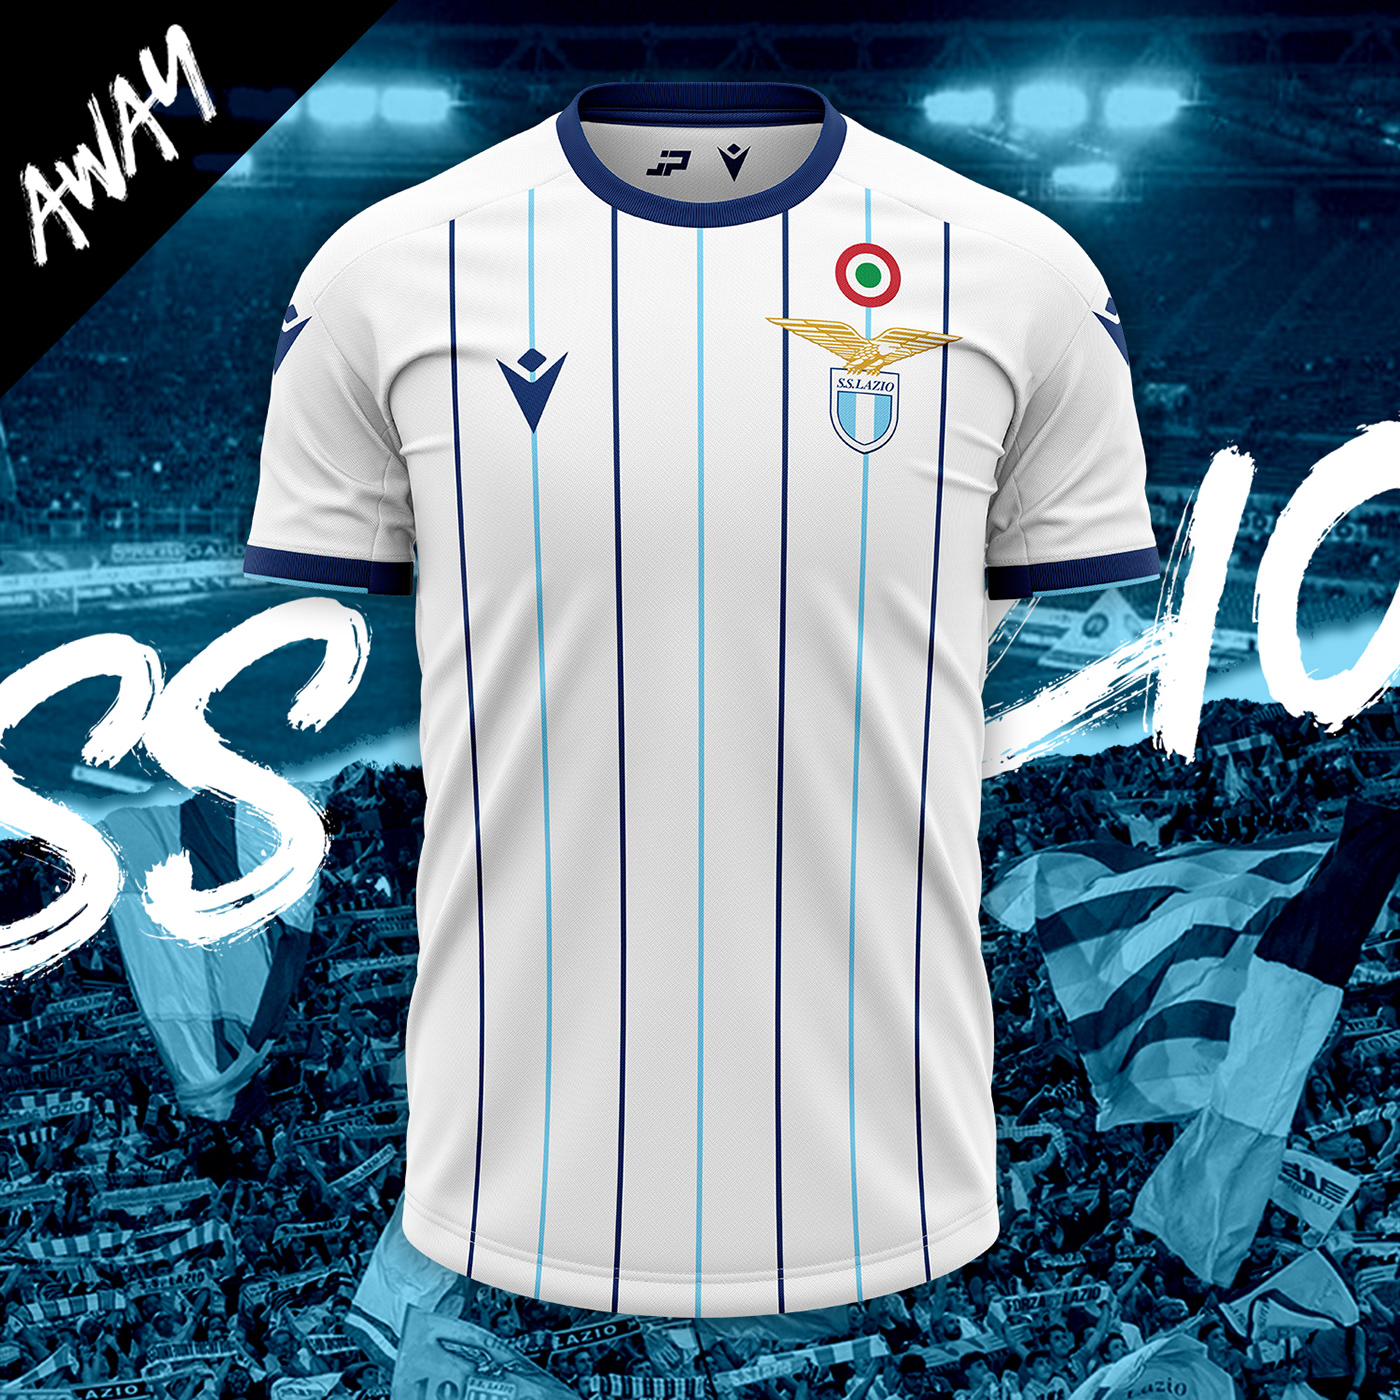 SS Lazio Lazio macron Serie A football soccer fantasy kit concept kit Foobtall Jersey football shirt